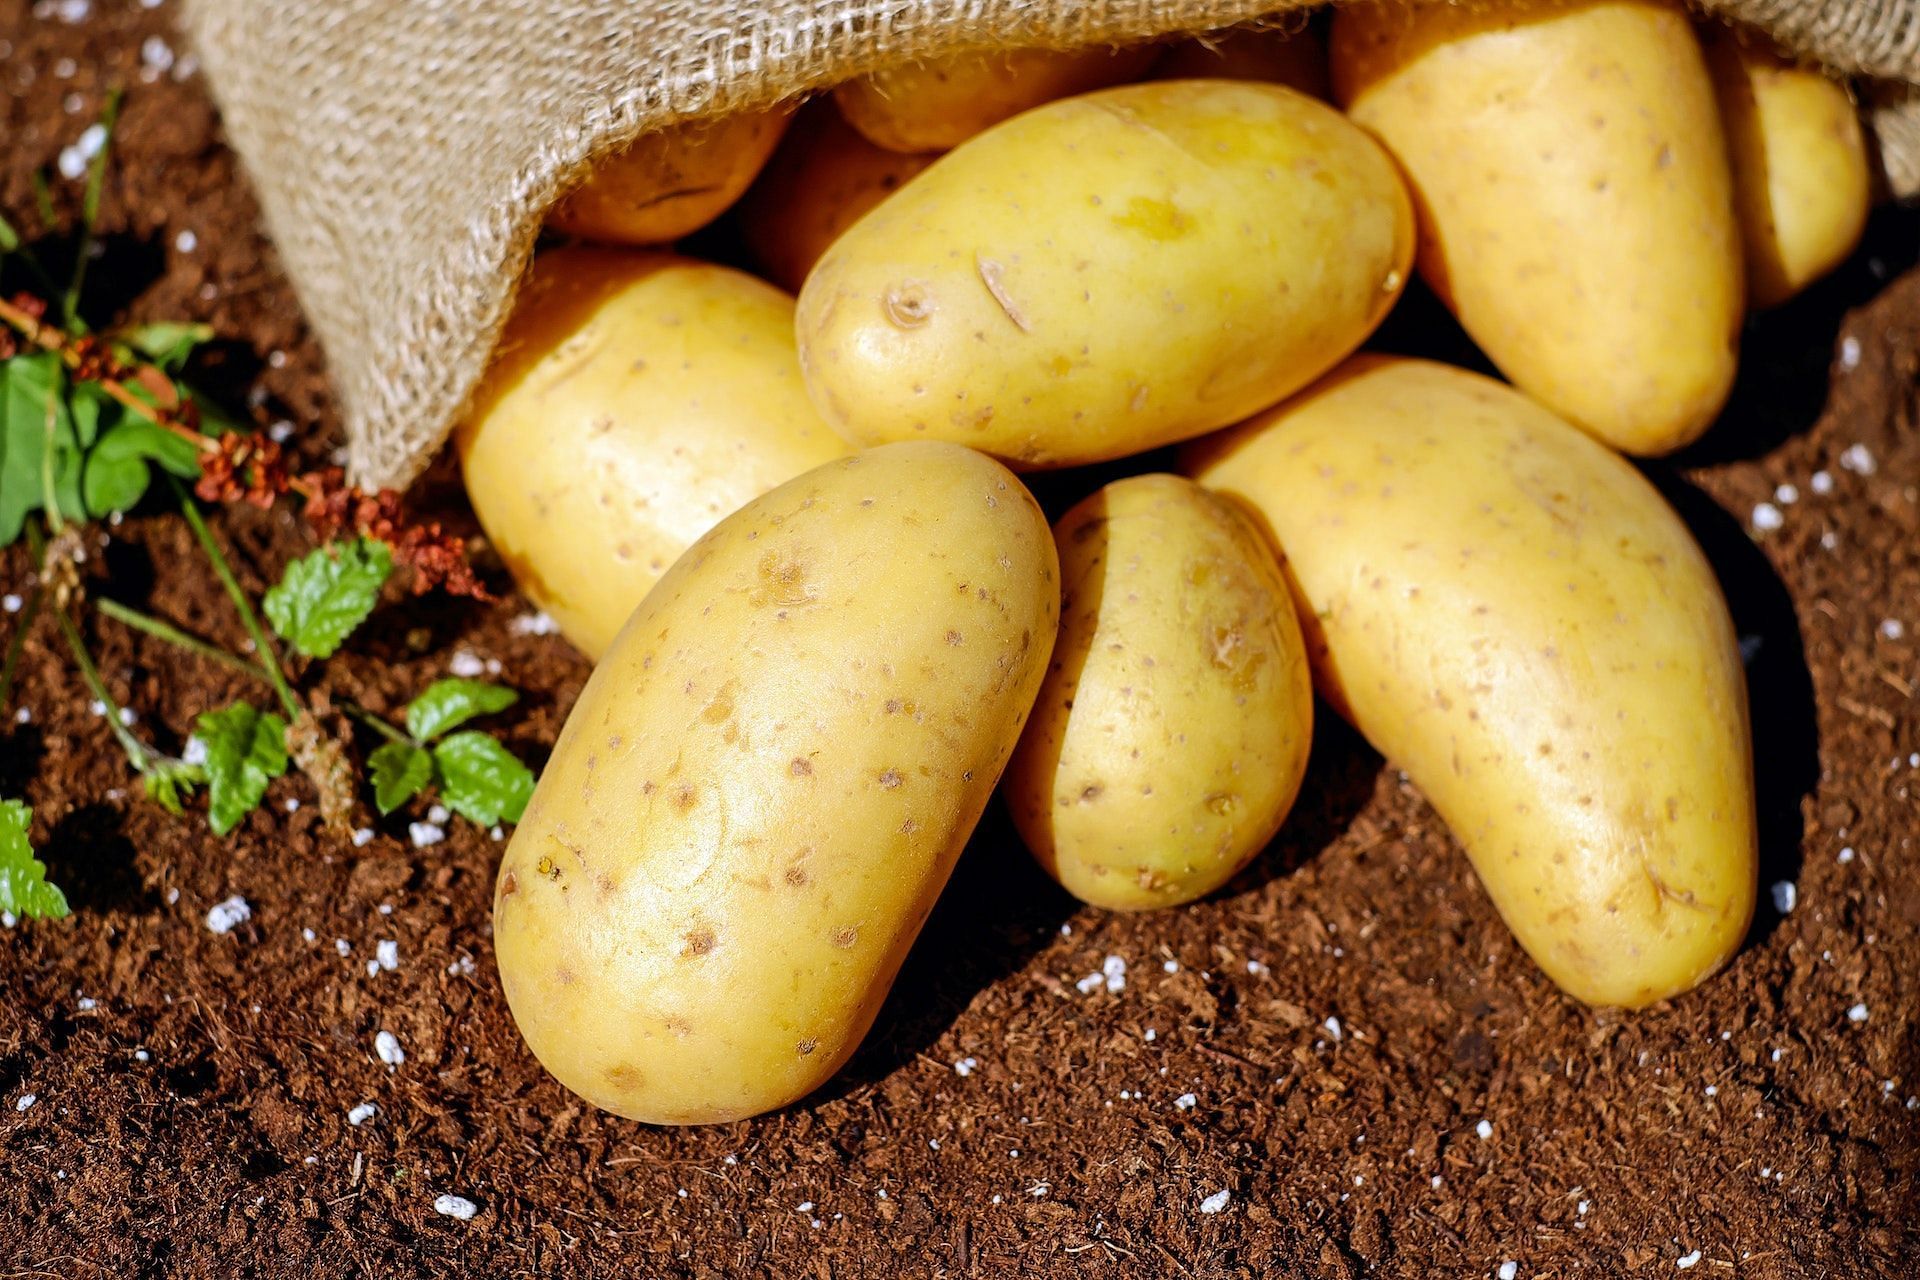 Potatoes are a staple vegetable. (Image via Pexels/Pixabay)